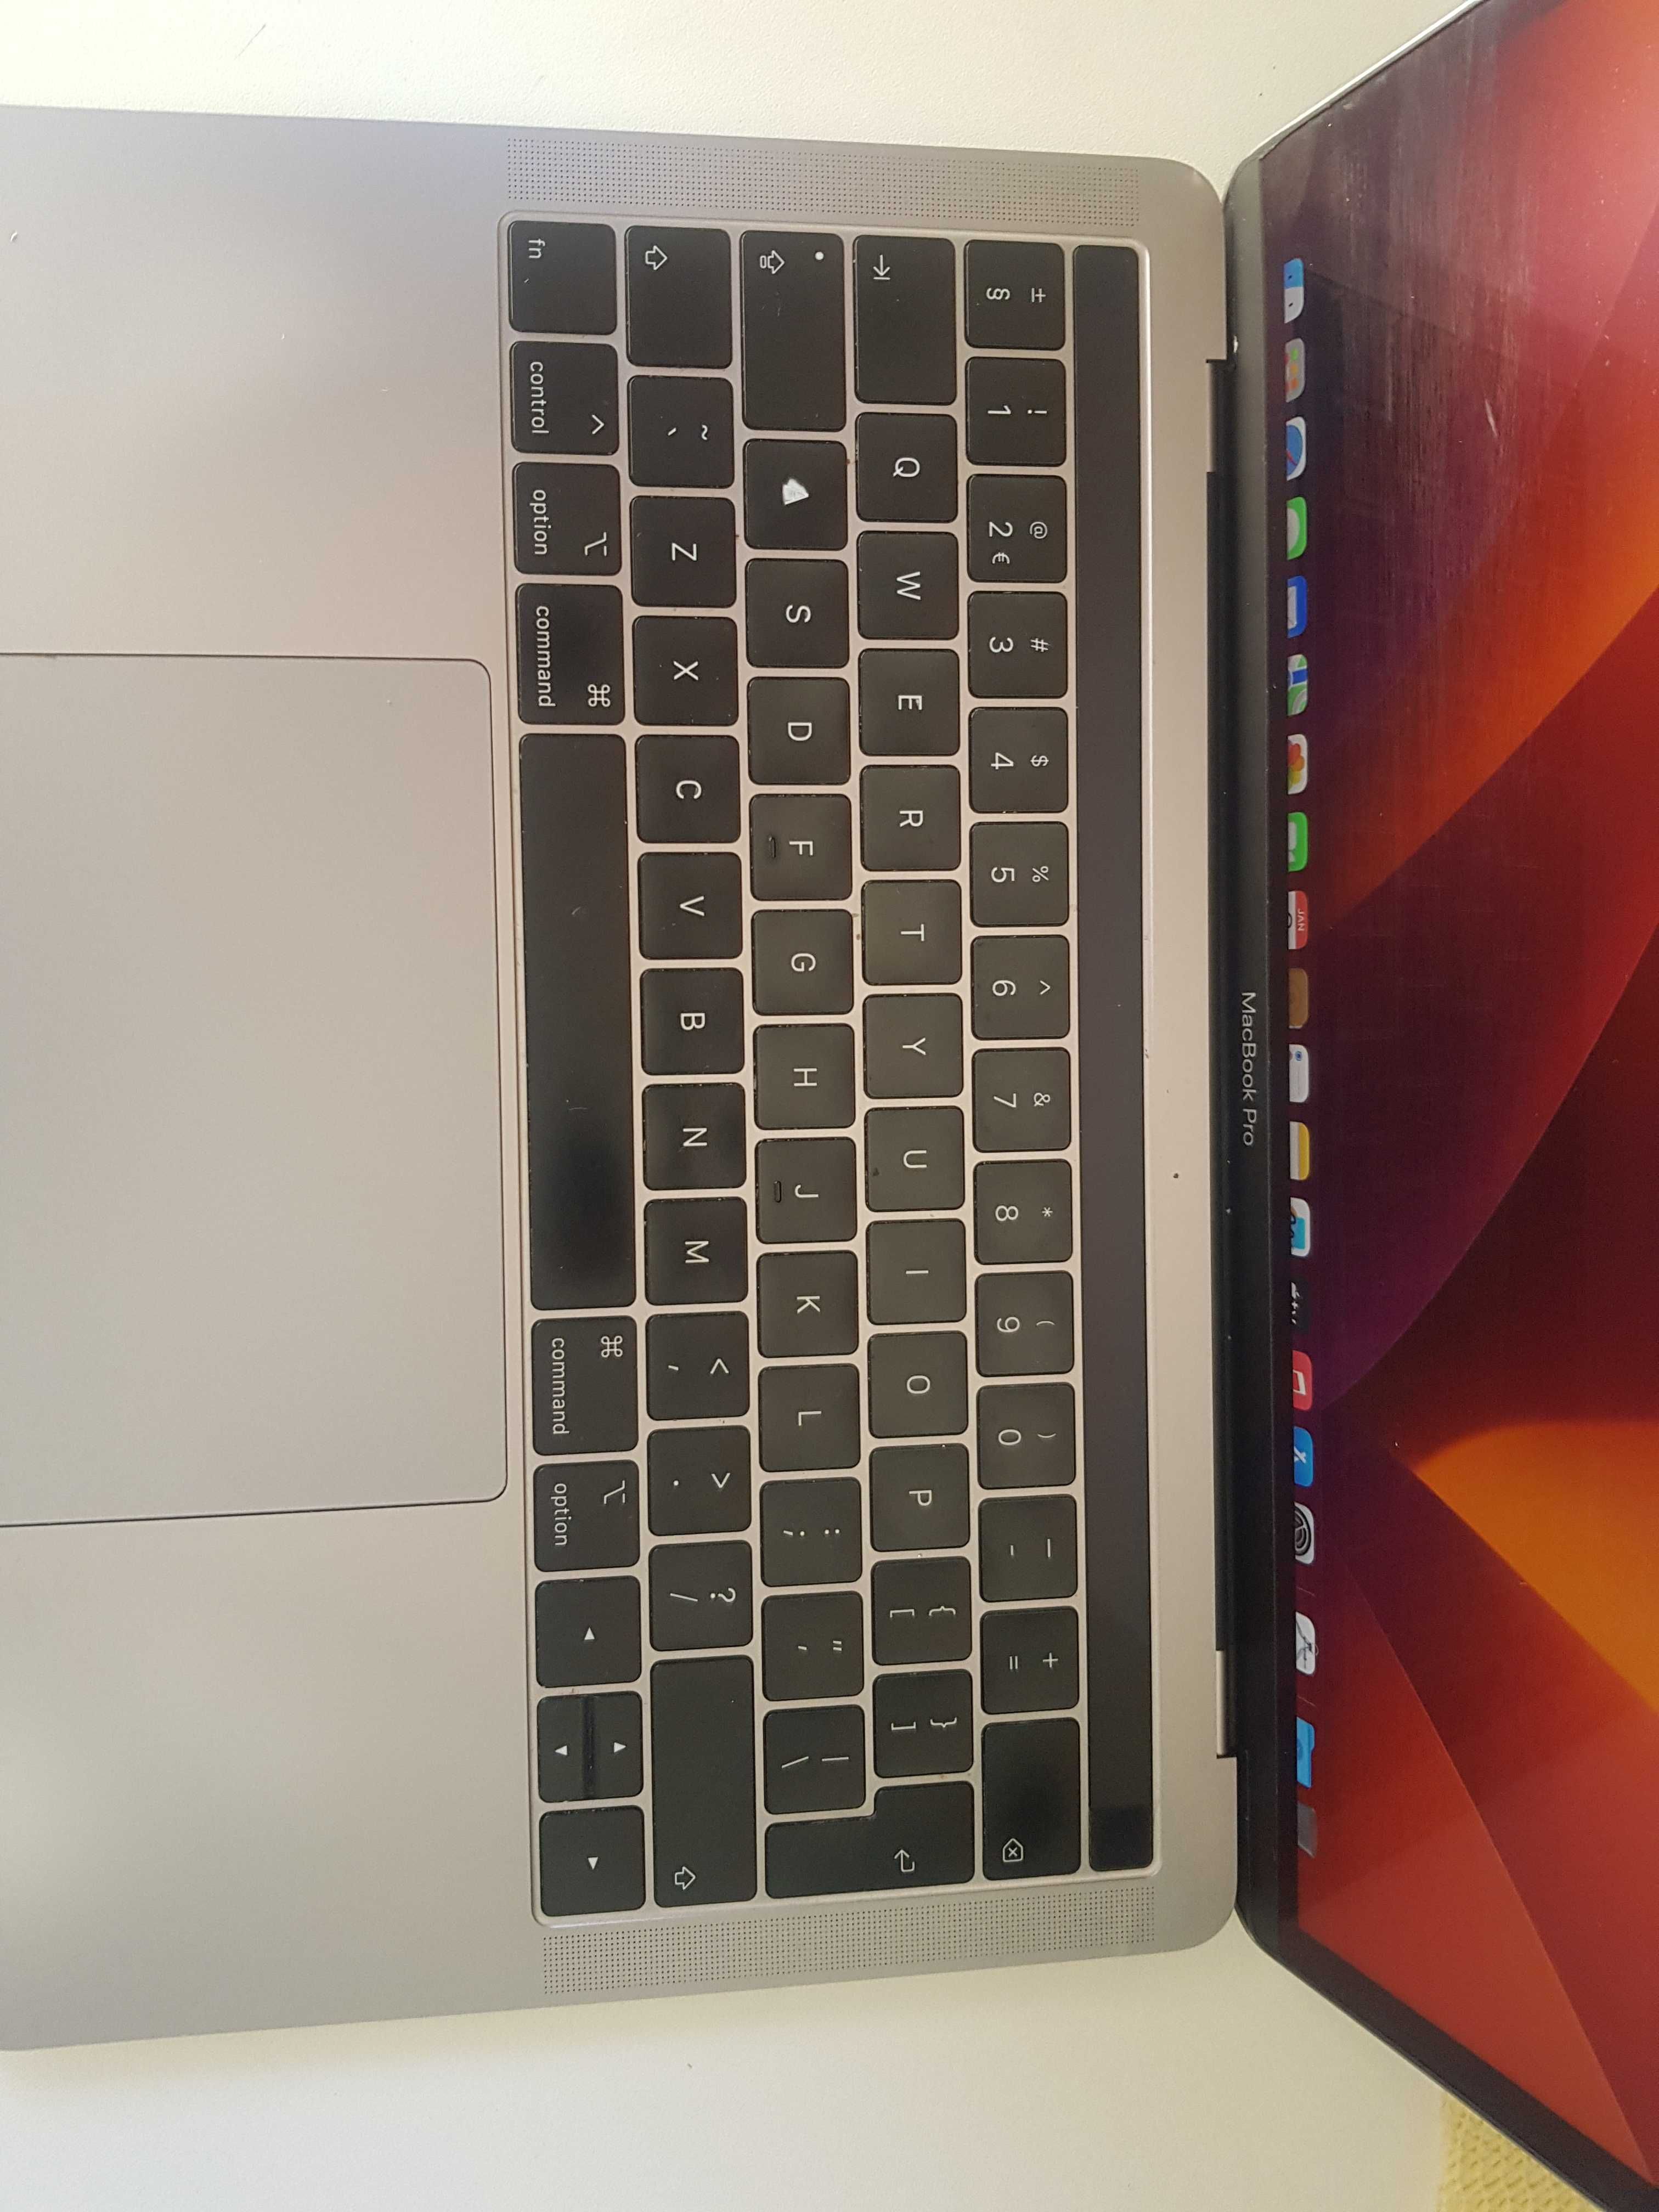 MacBook Pro (13-inch, 2018, Four Thunderbolt 3 Ports)